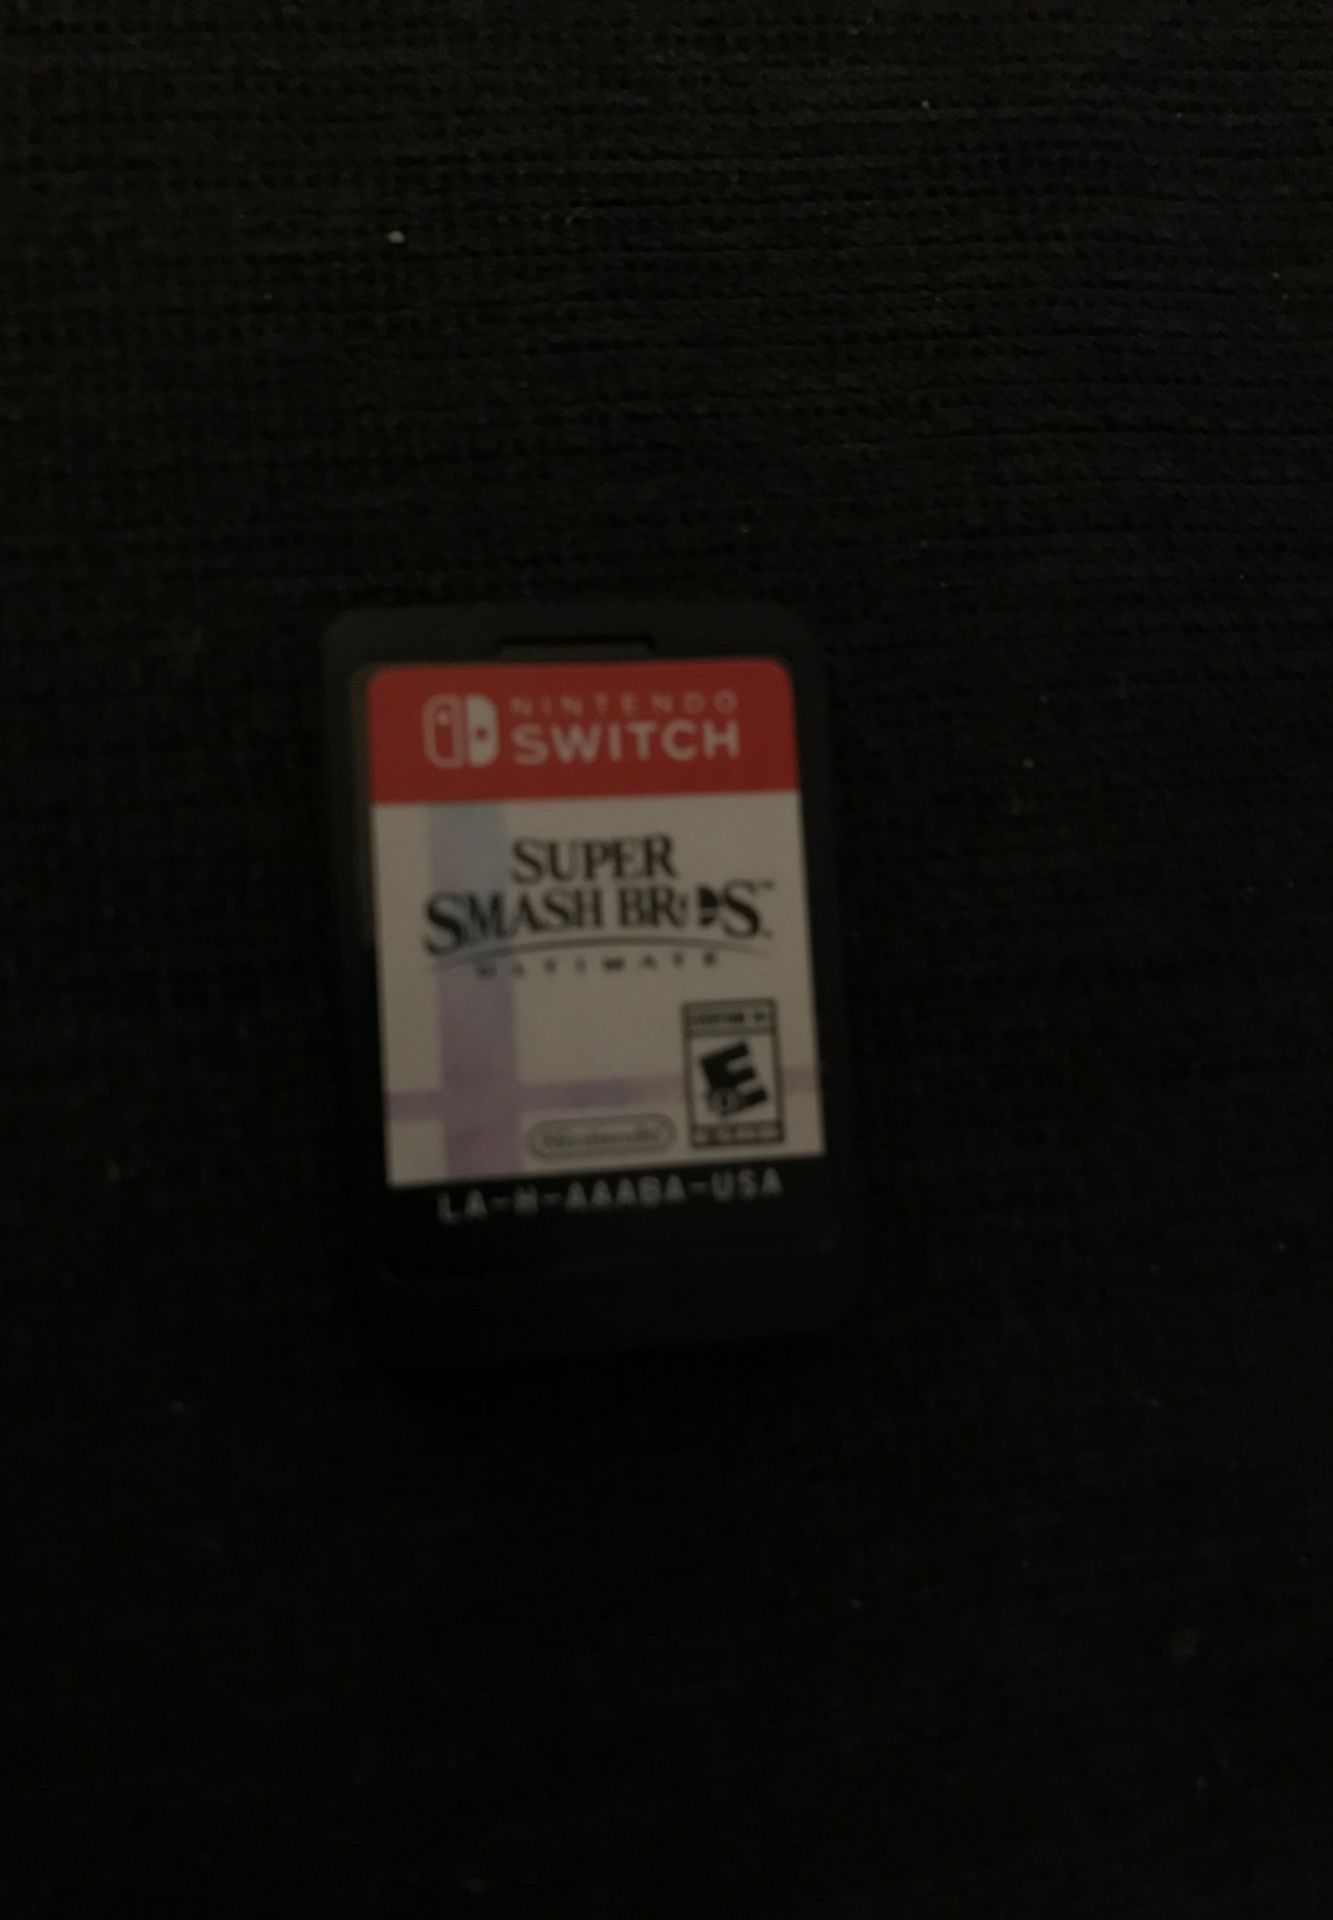 Super smash bro’s Nintendo switch